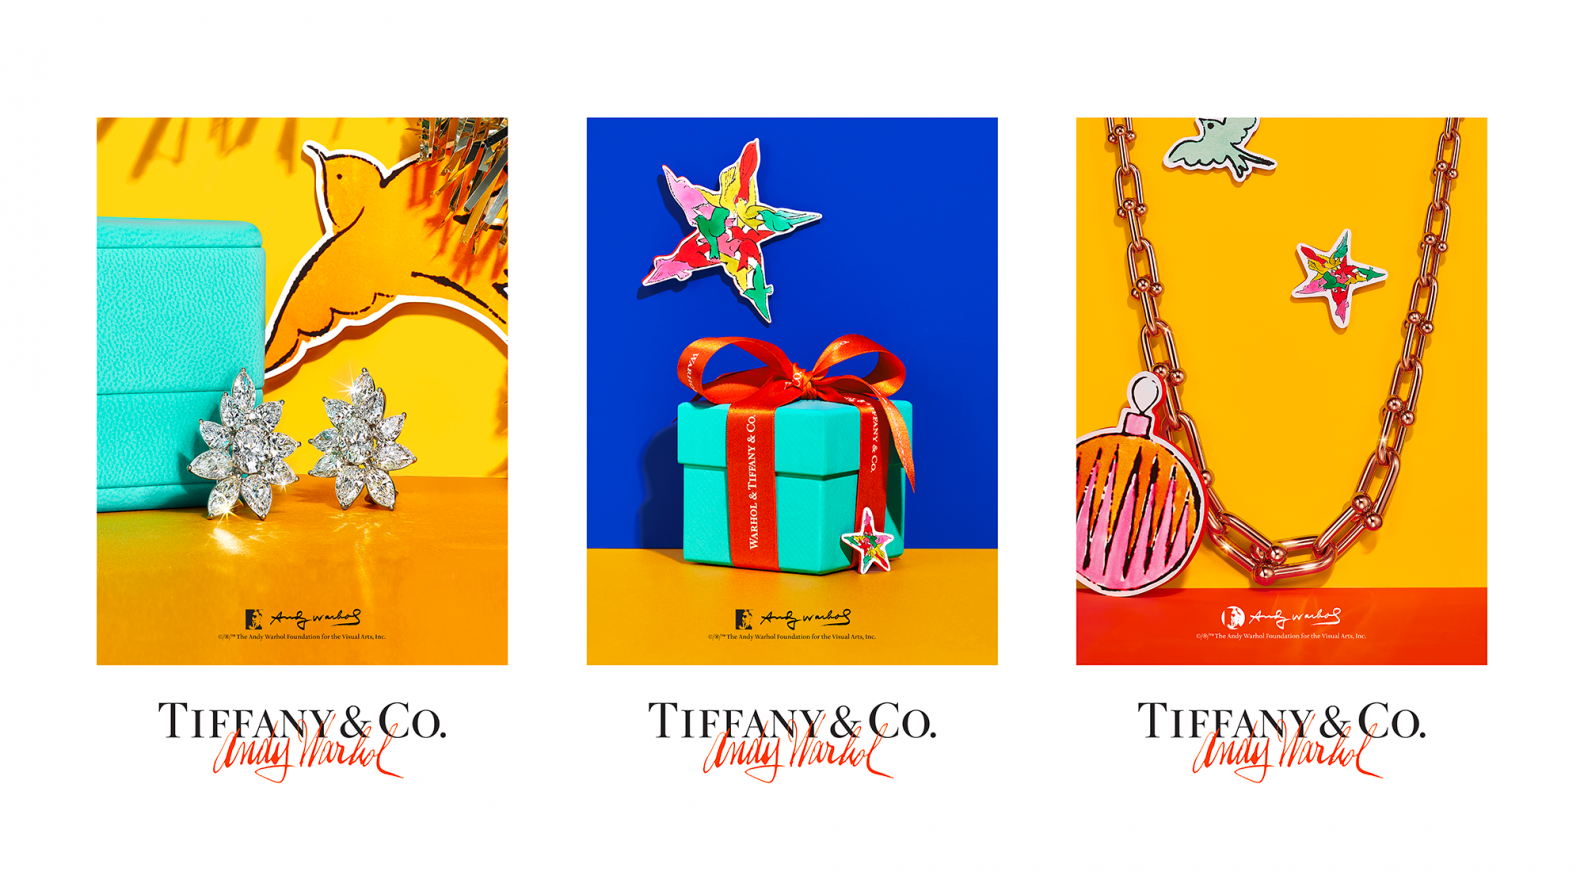 GIVENCHY  Tiffany & Co. x Givenchy Collaboration 